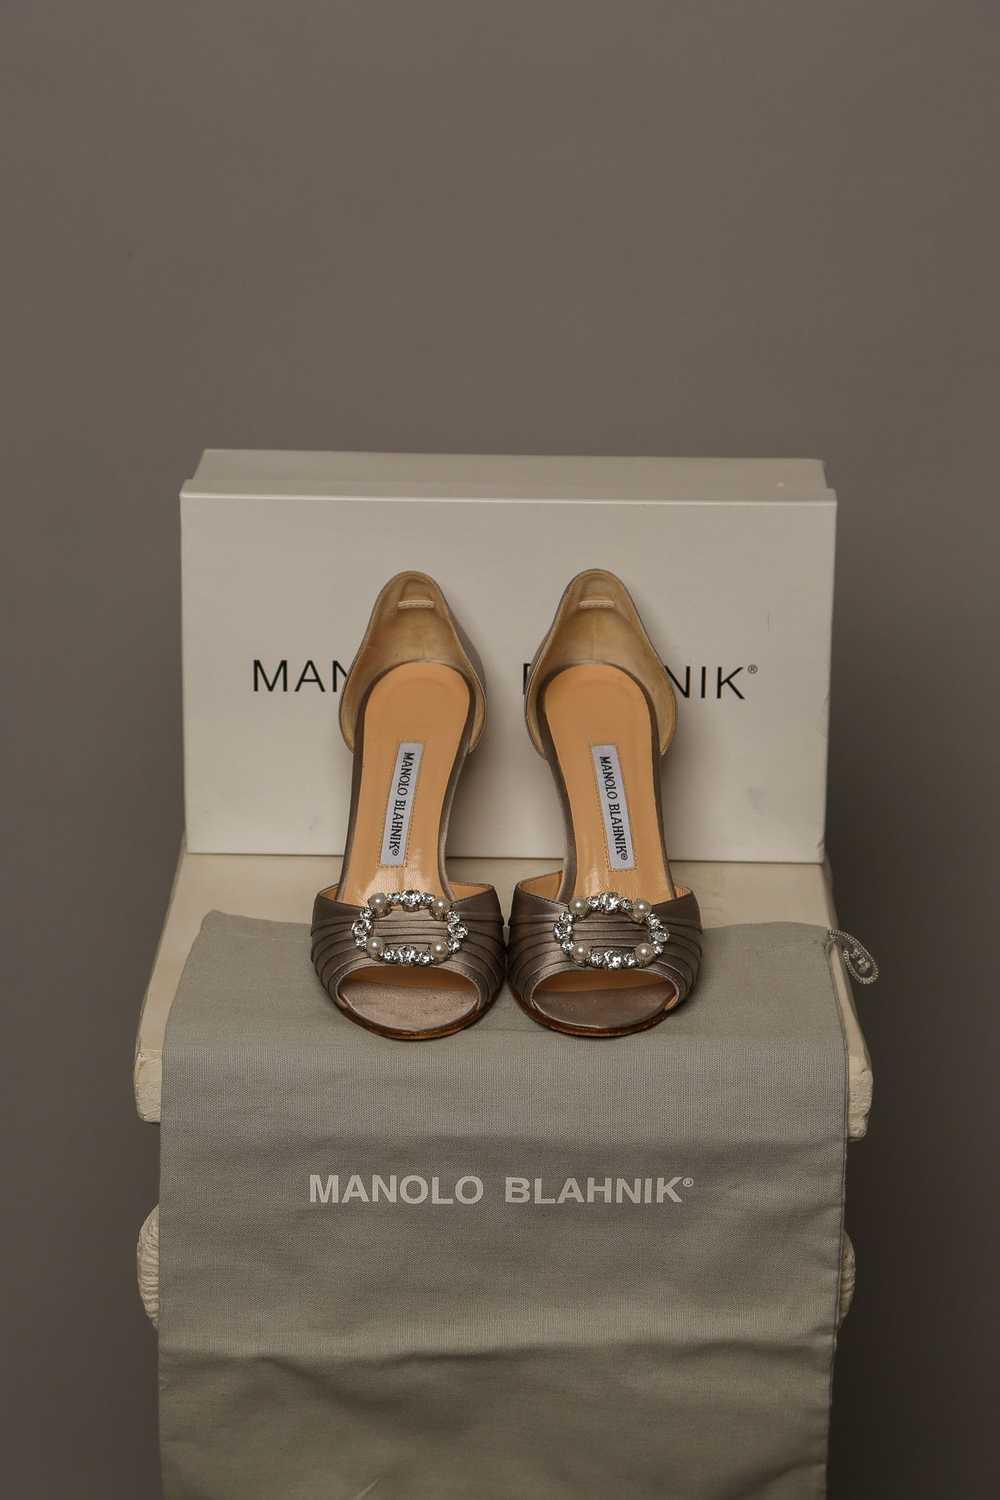 Manolo Blahnik MANOLO BLAHNIK Silver Sandals - image 4